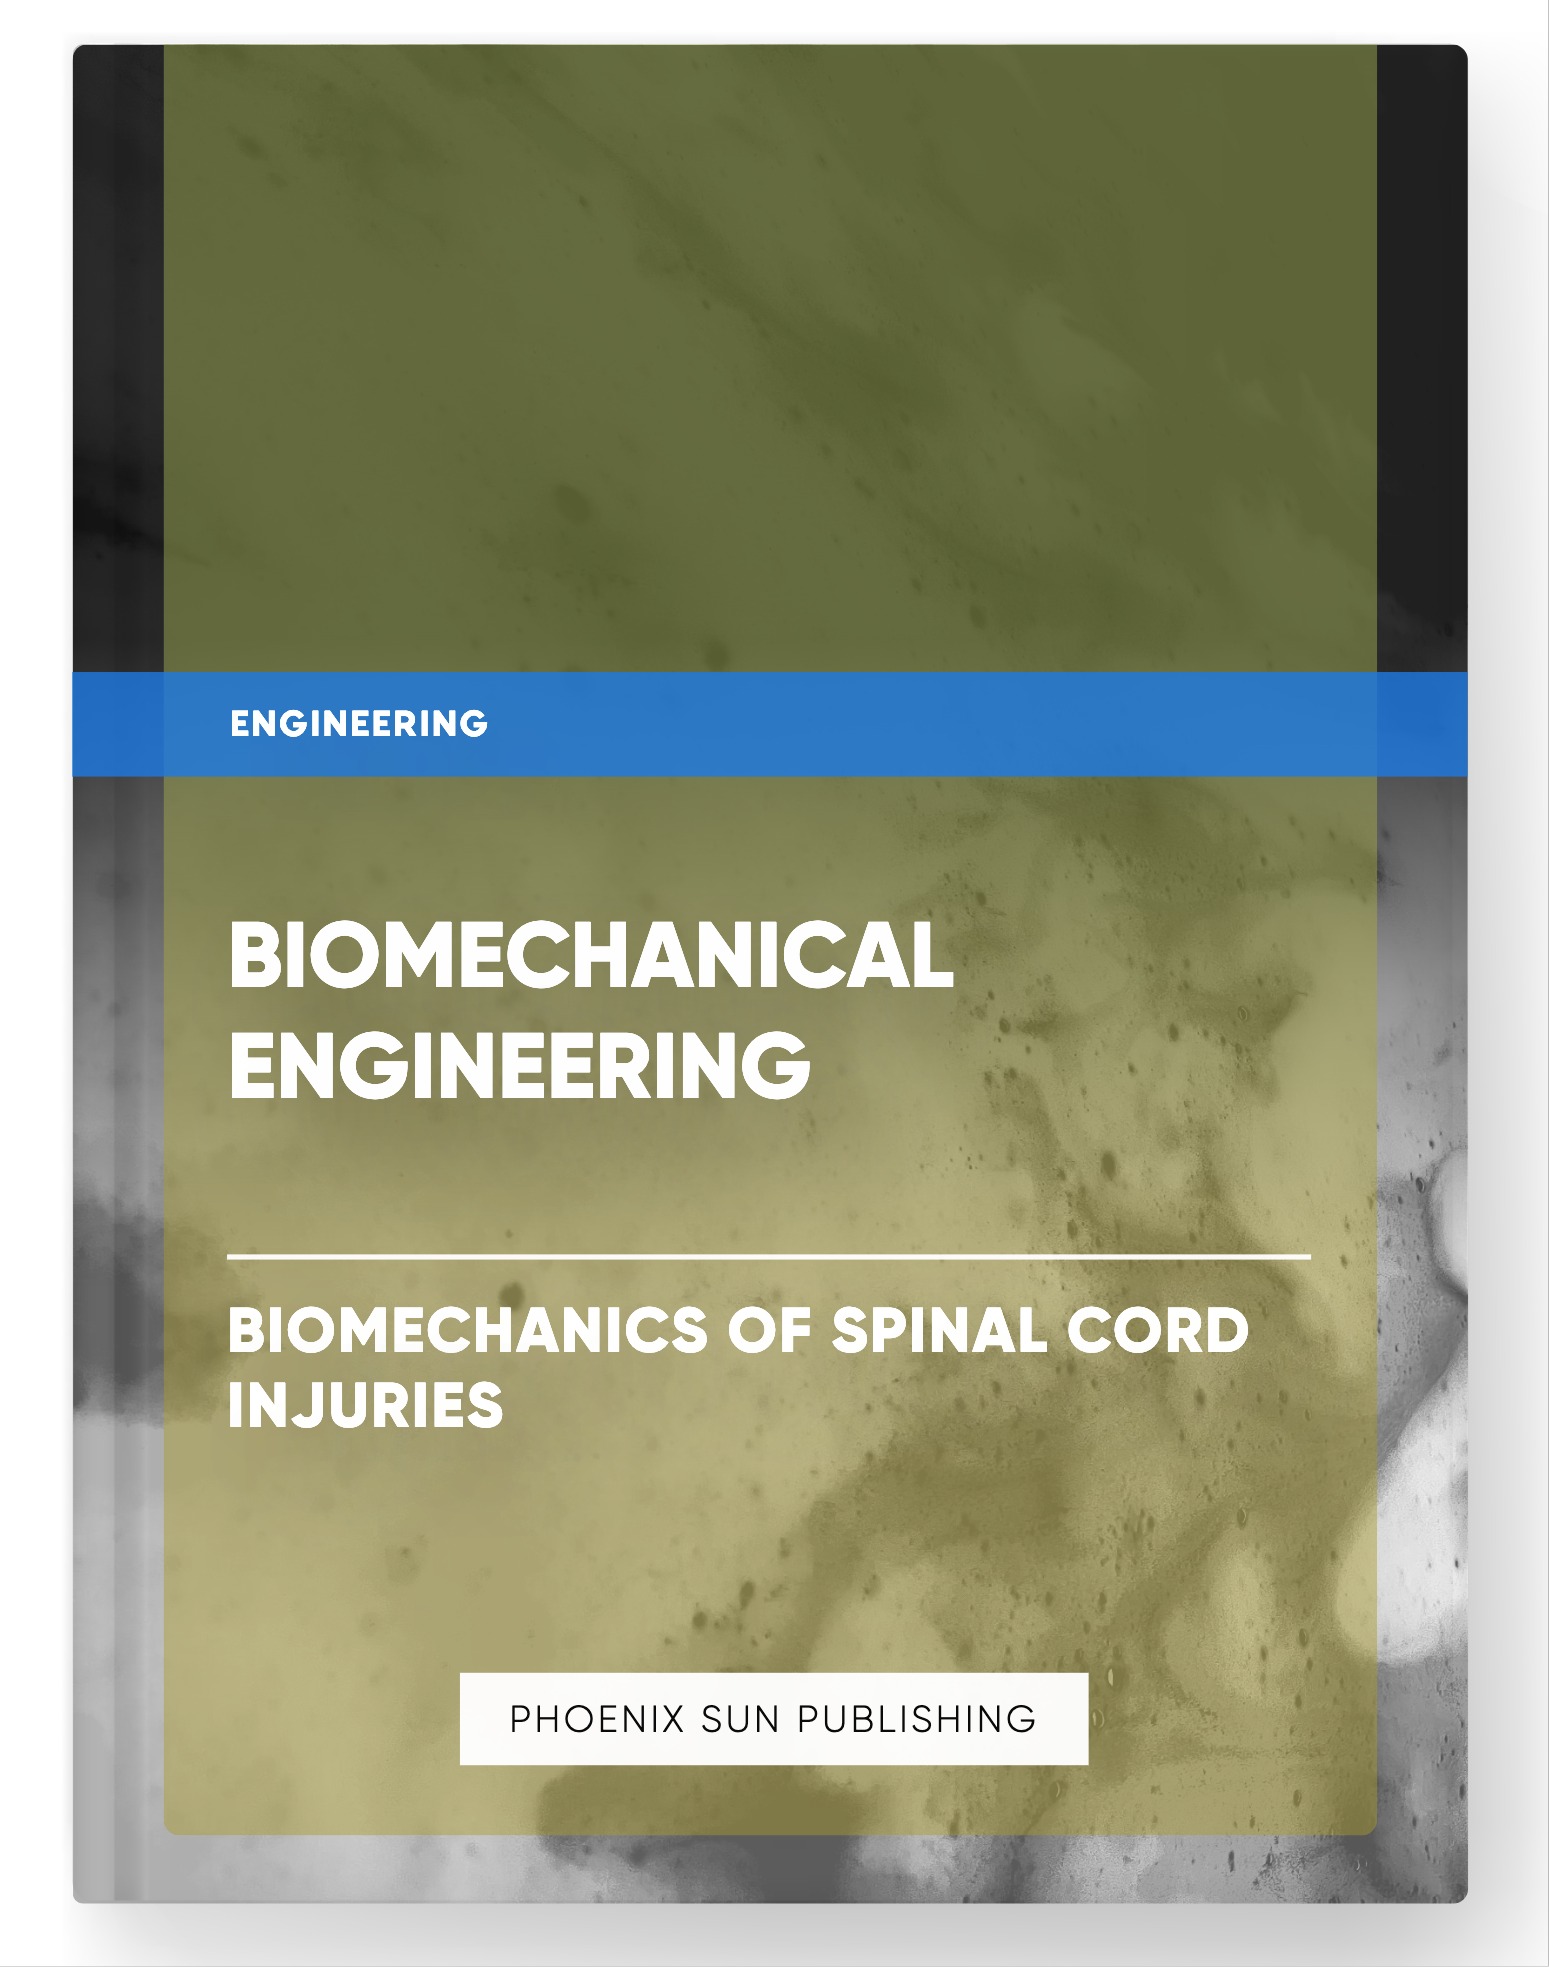 Biomechanical Engineering – Biomechanics of Spinal Cord Injuries